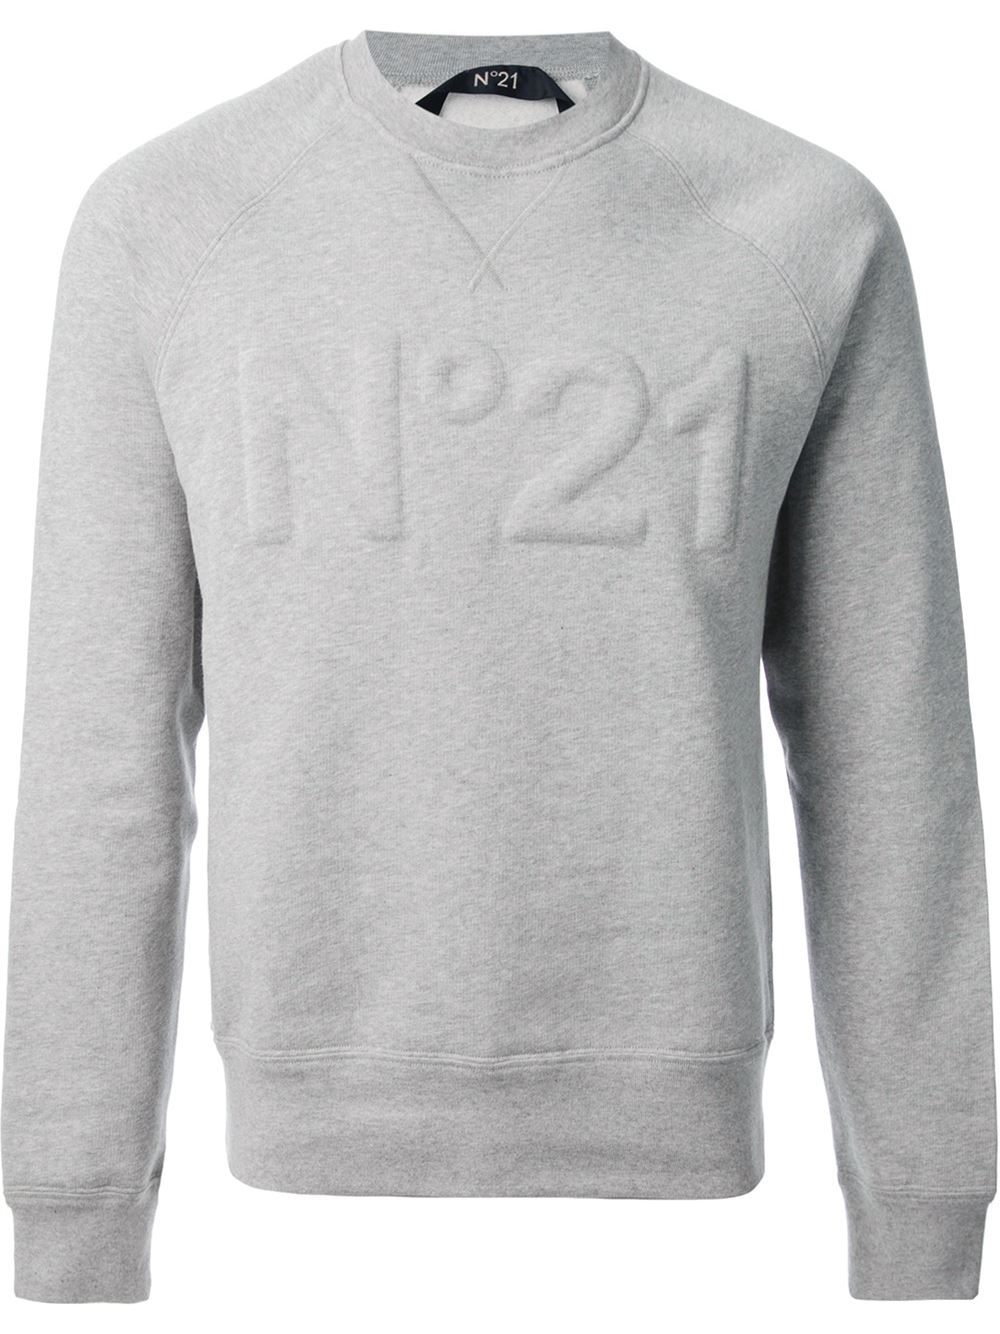 N°21 Logo Embossed Sweater in Grey (Gray) for Men - Lyst